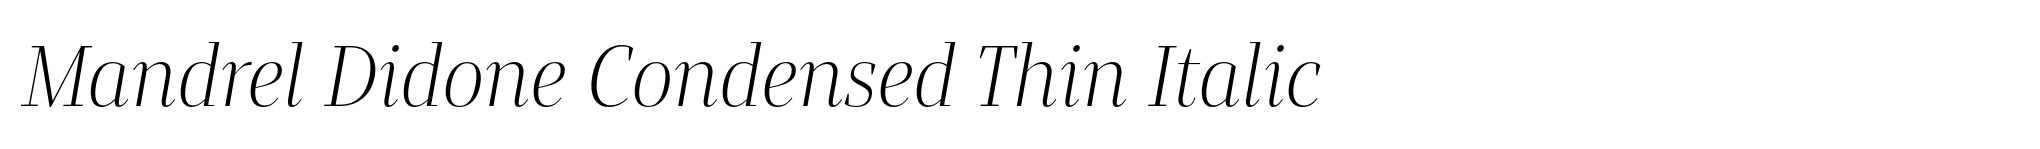 Mandrel Didone Condensed Thin Italic image